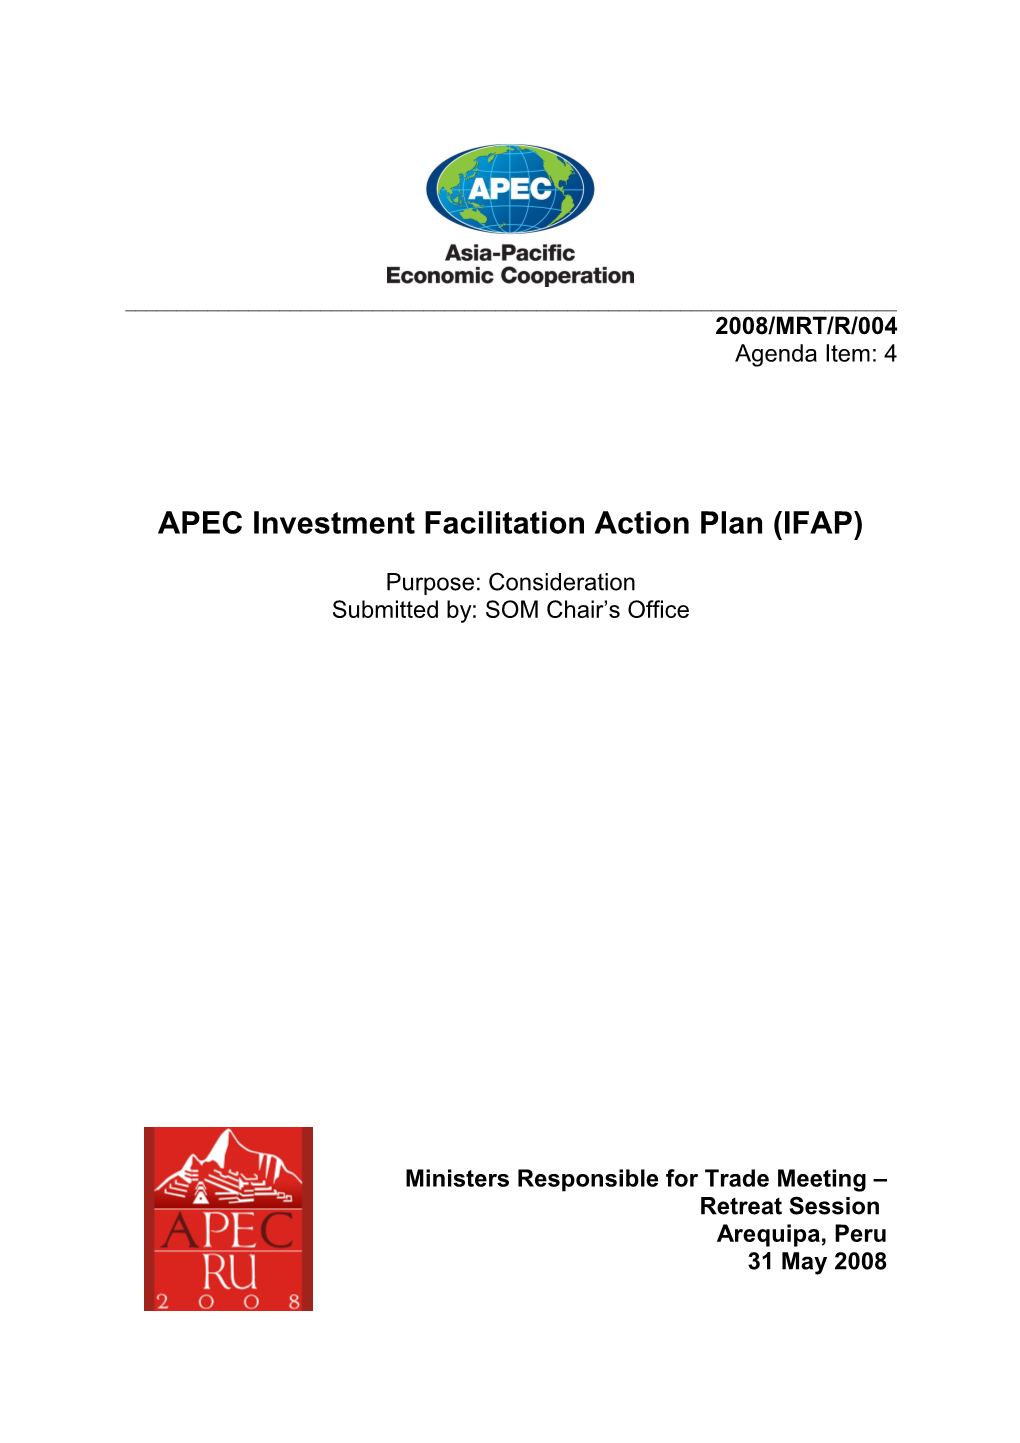 APEC Investment Facilitation Action Plan